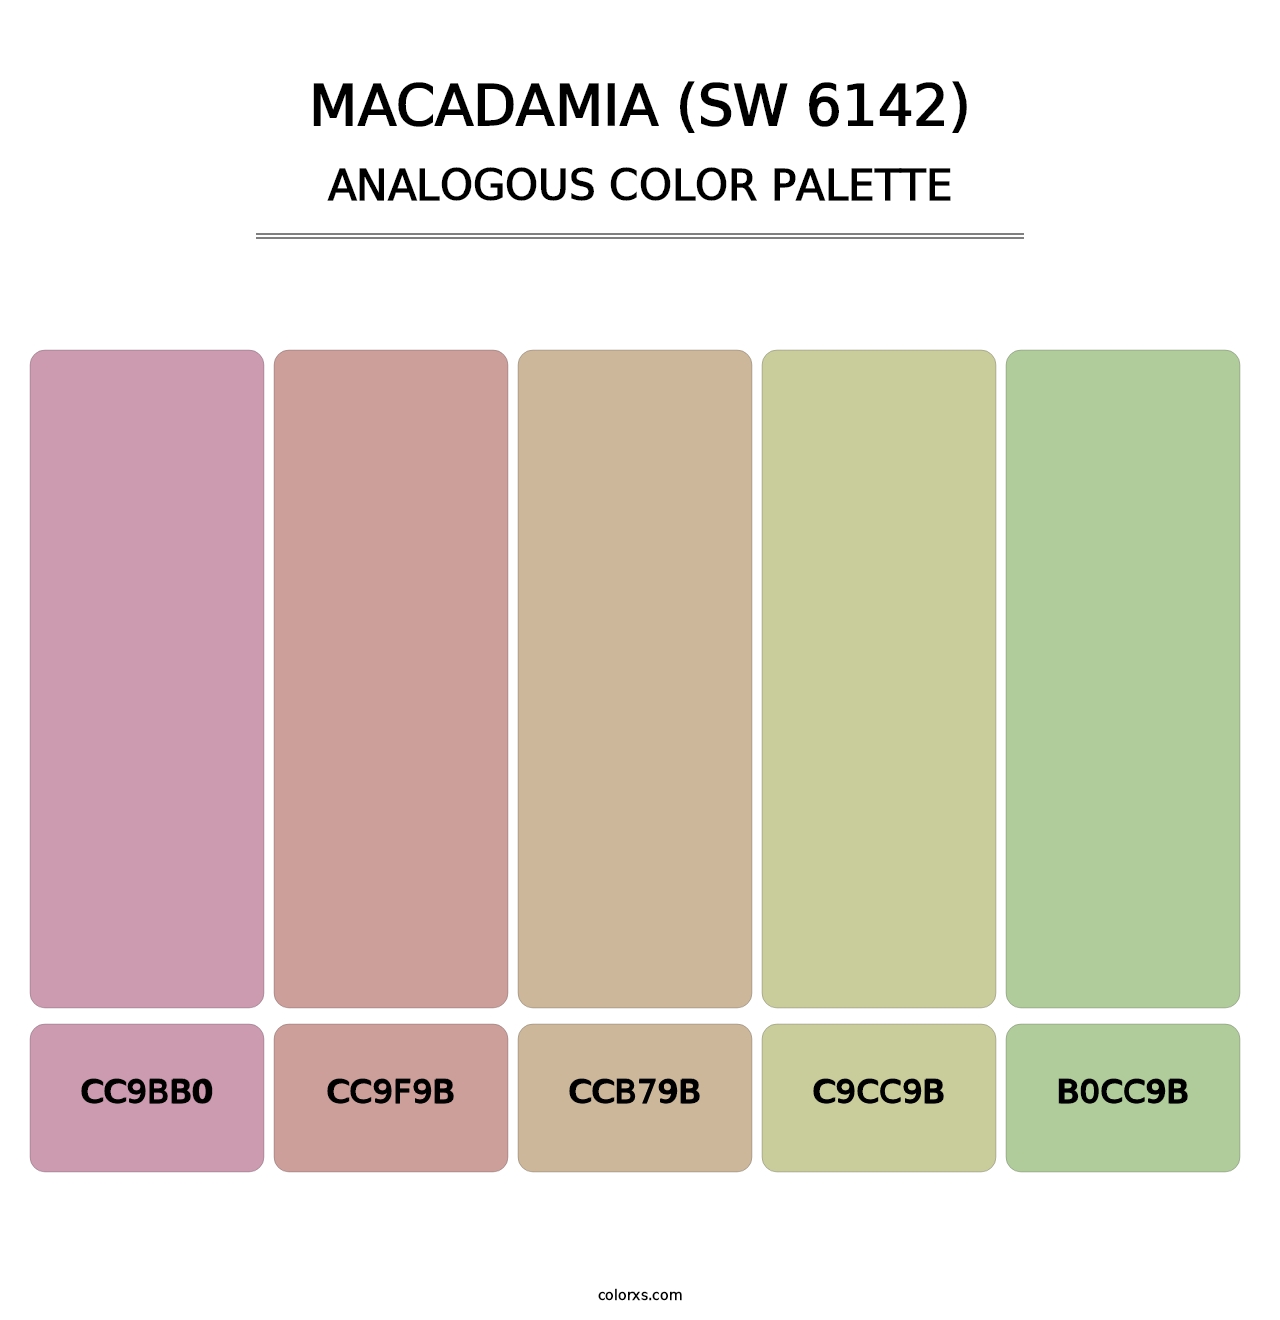 Macadamia (SW 6142) - Analogous Color Palette